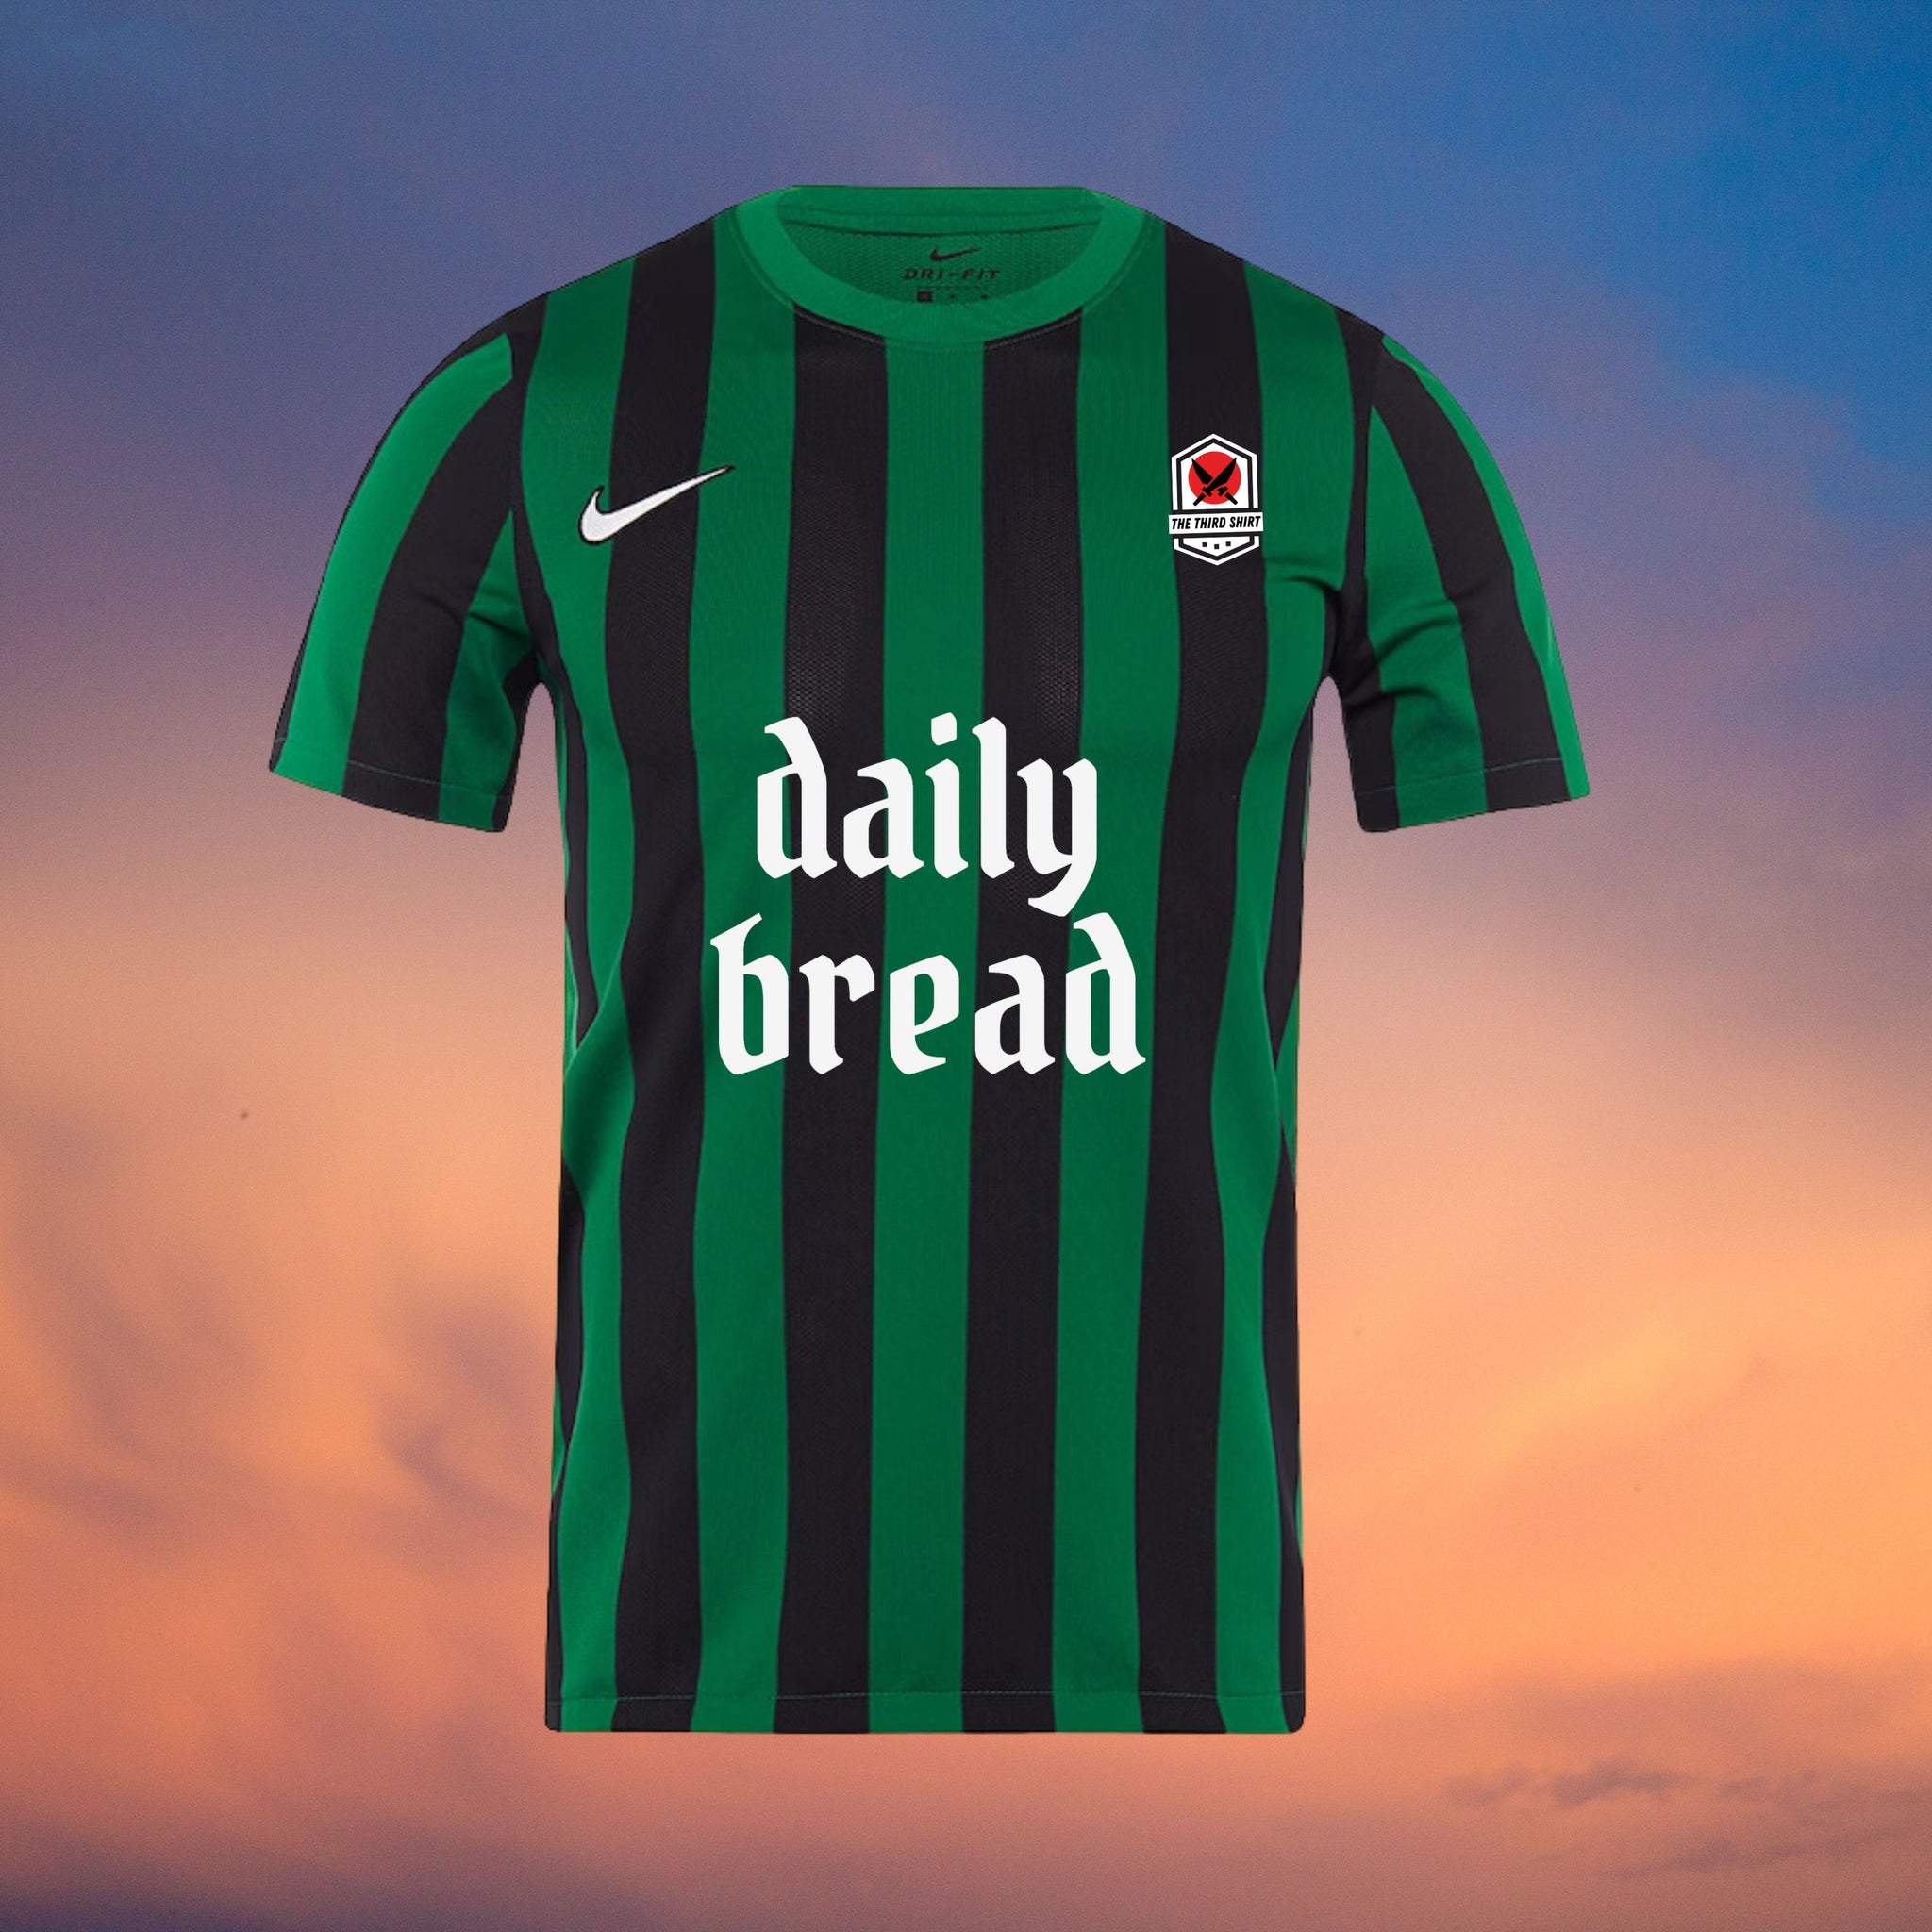 Daily Bread - Green/Black - Nike Dri-FIT Striped Division Shirt